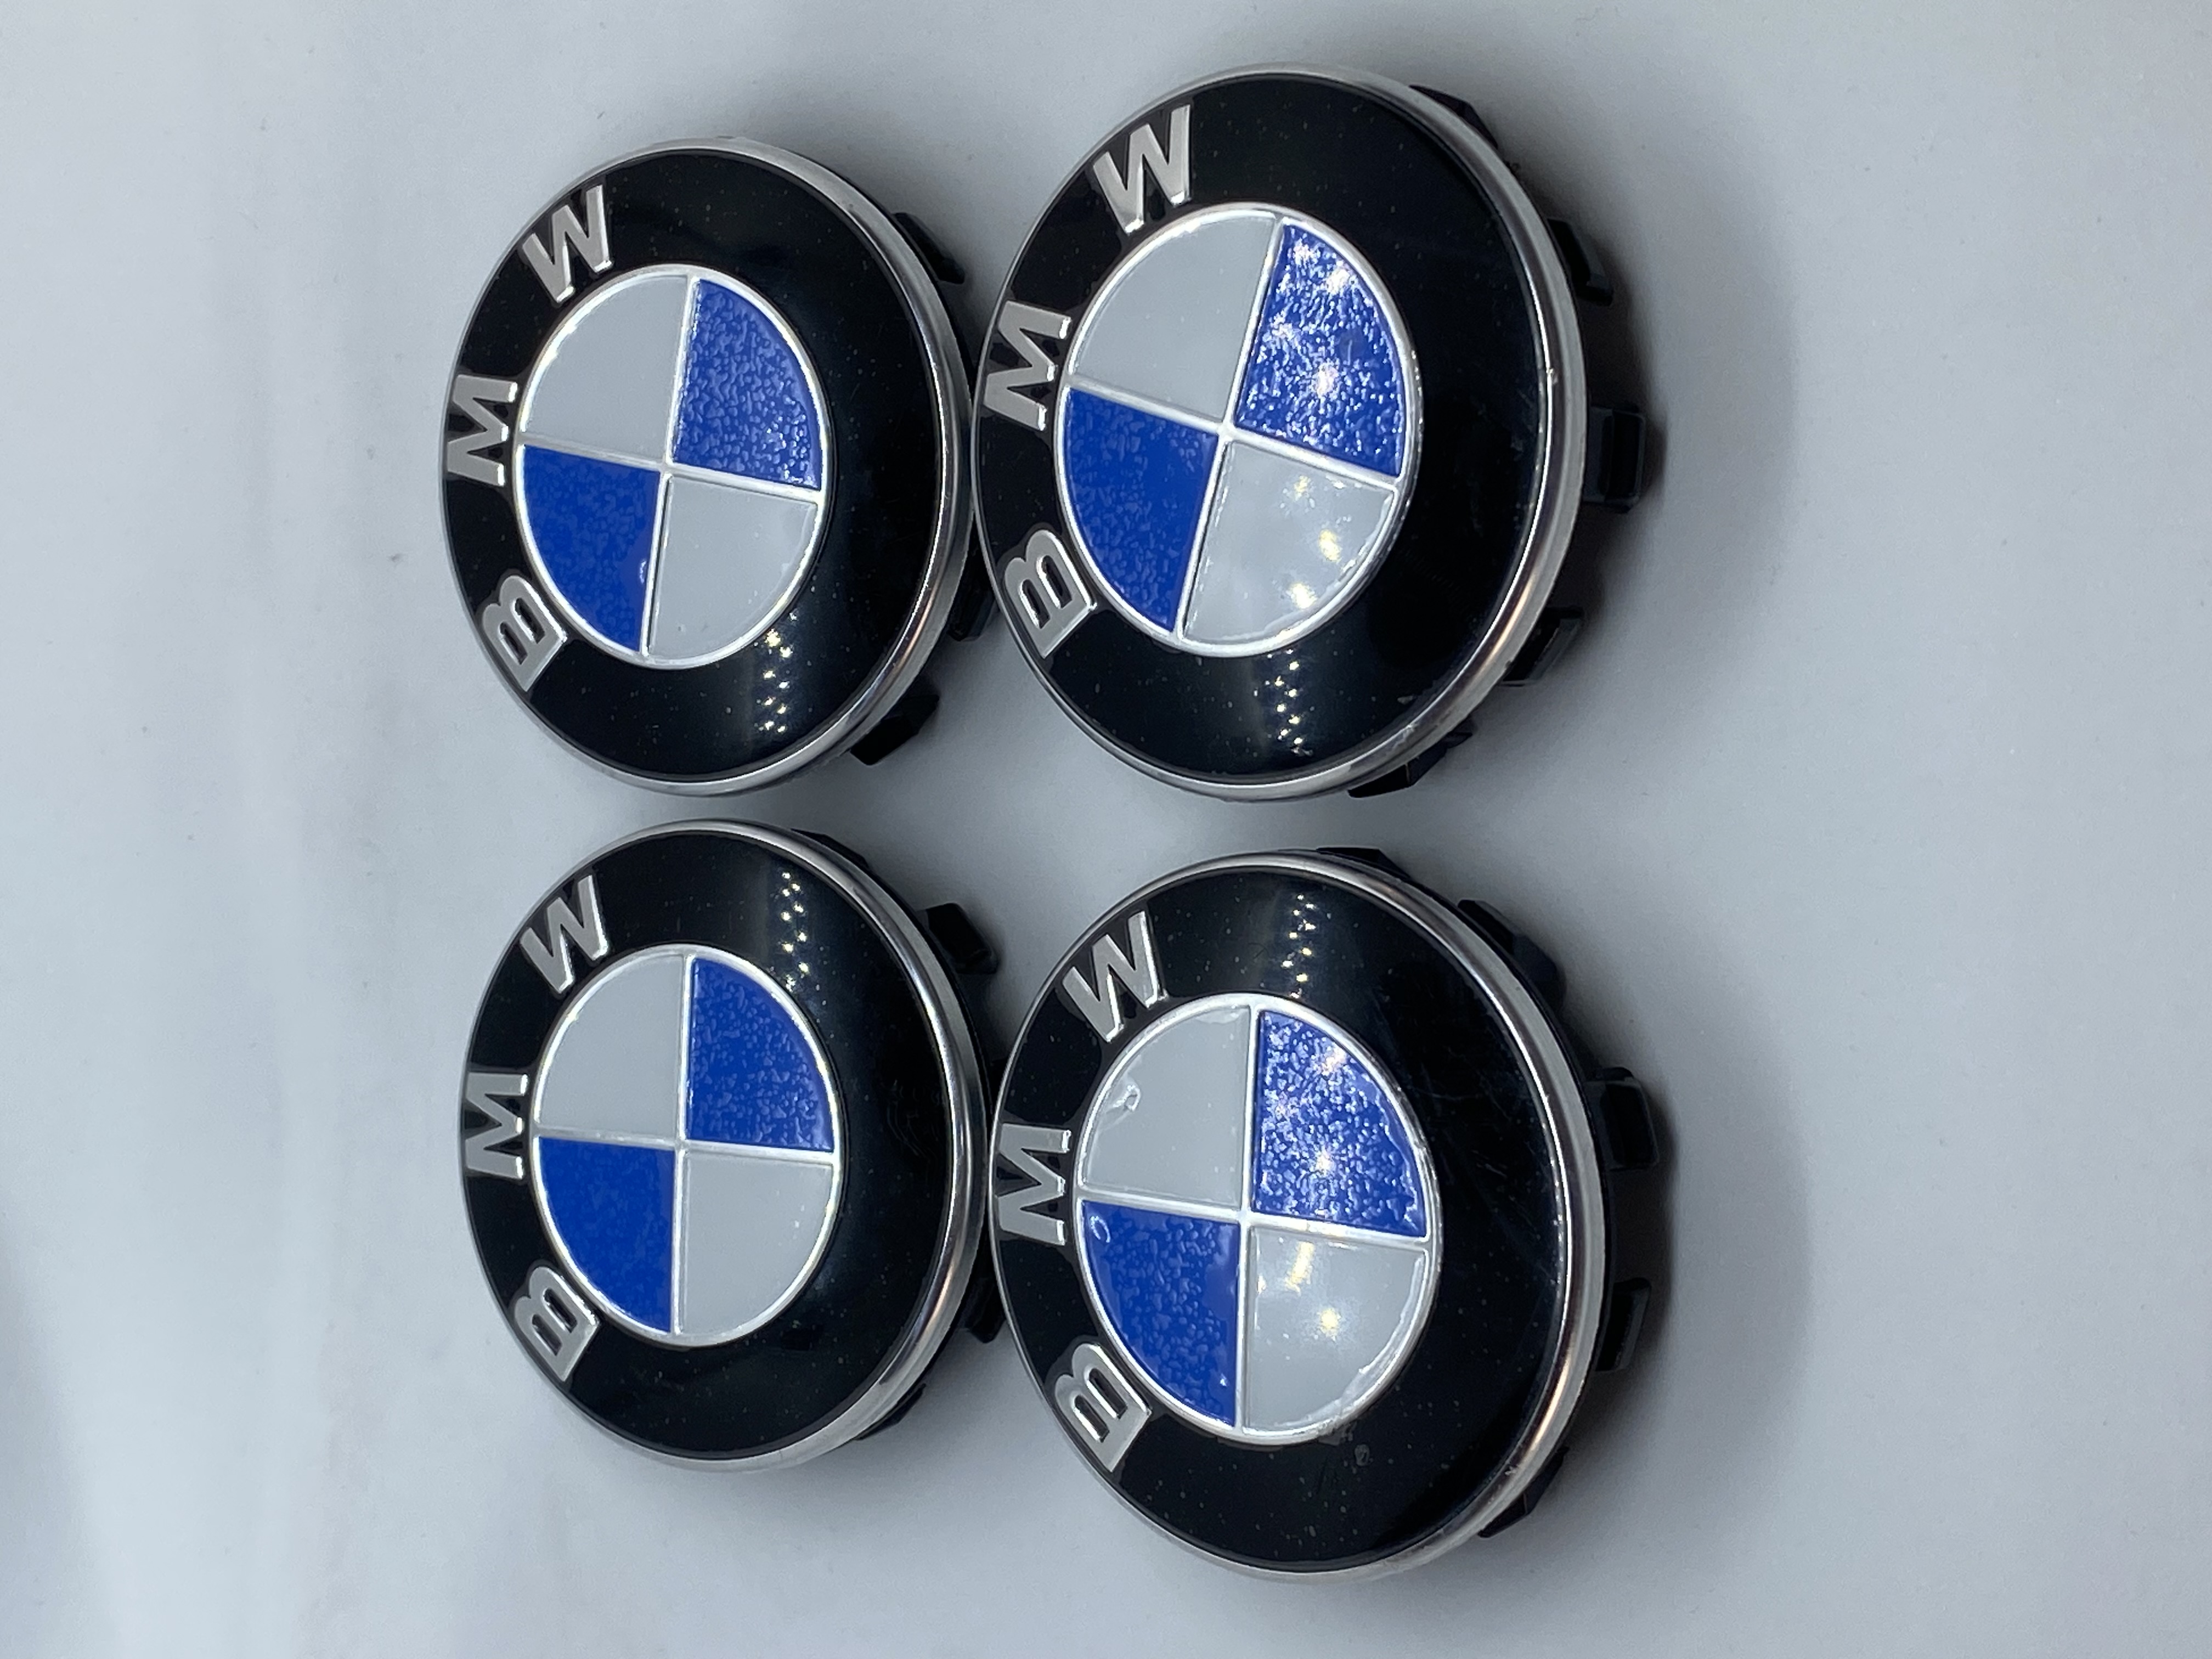 Emblema BMW 82 MM 2 Pines autoadhesivo Negro Performance (para capó/maletero)  - E-DZSHOP AUTOPARTS